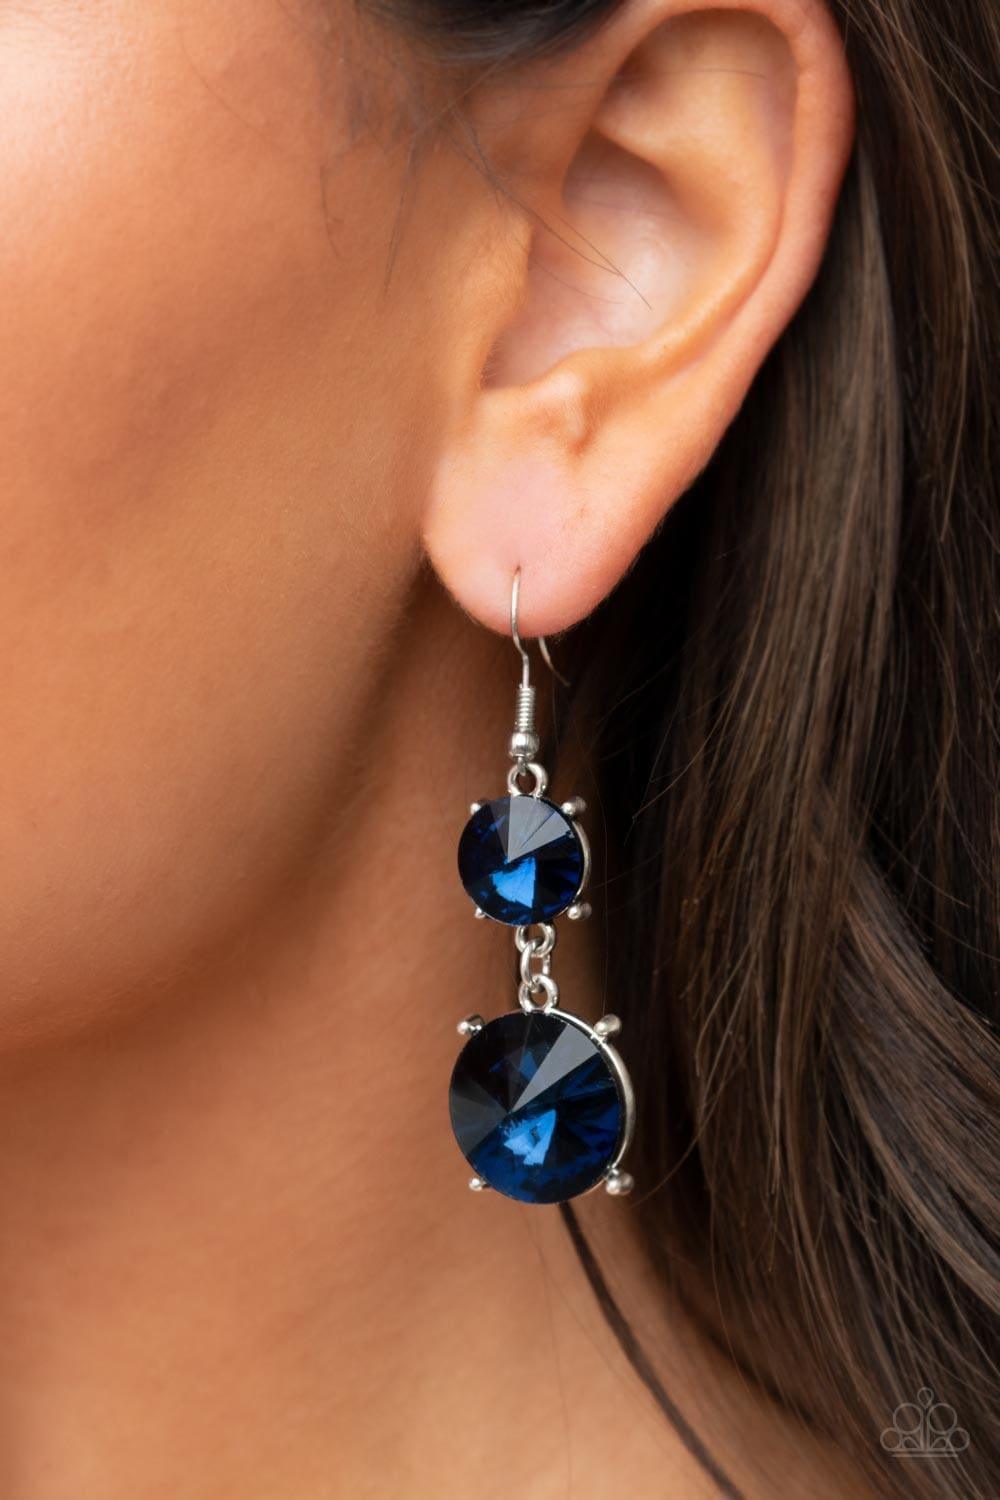 Paparazzi Accessories - Sizzling Showcase - Blue Earrings - Bling by JessieK